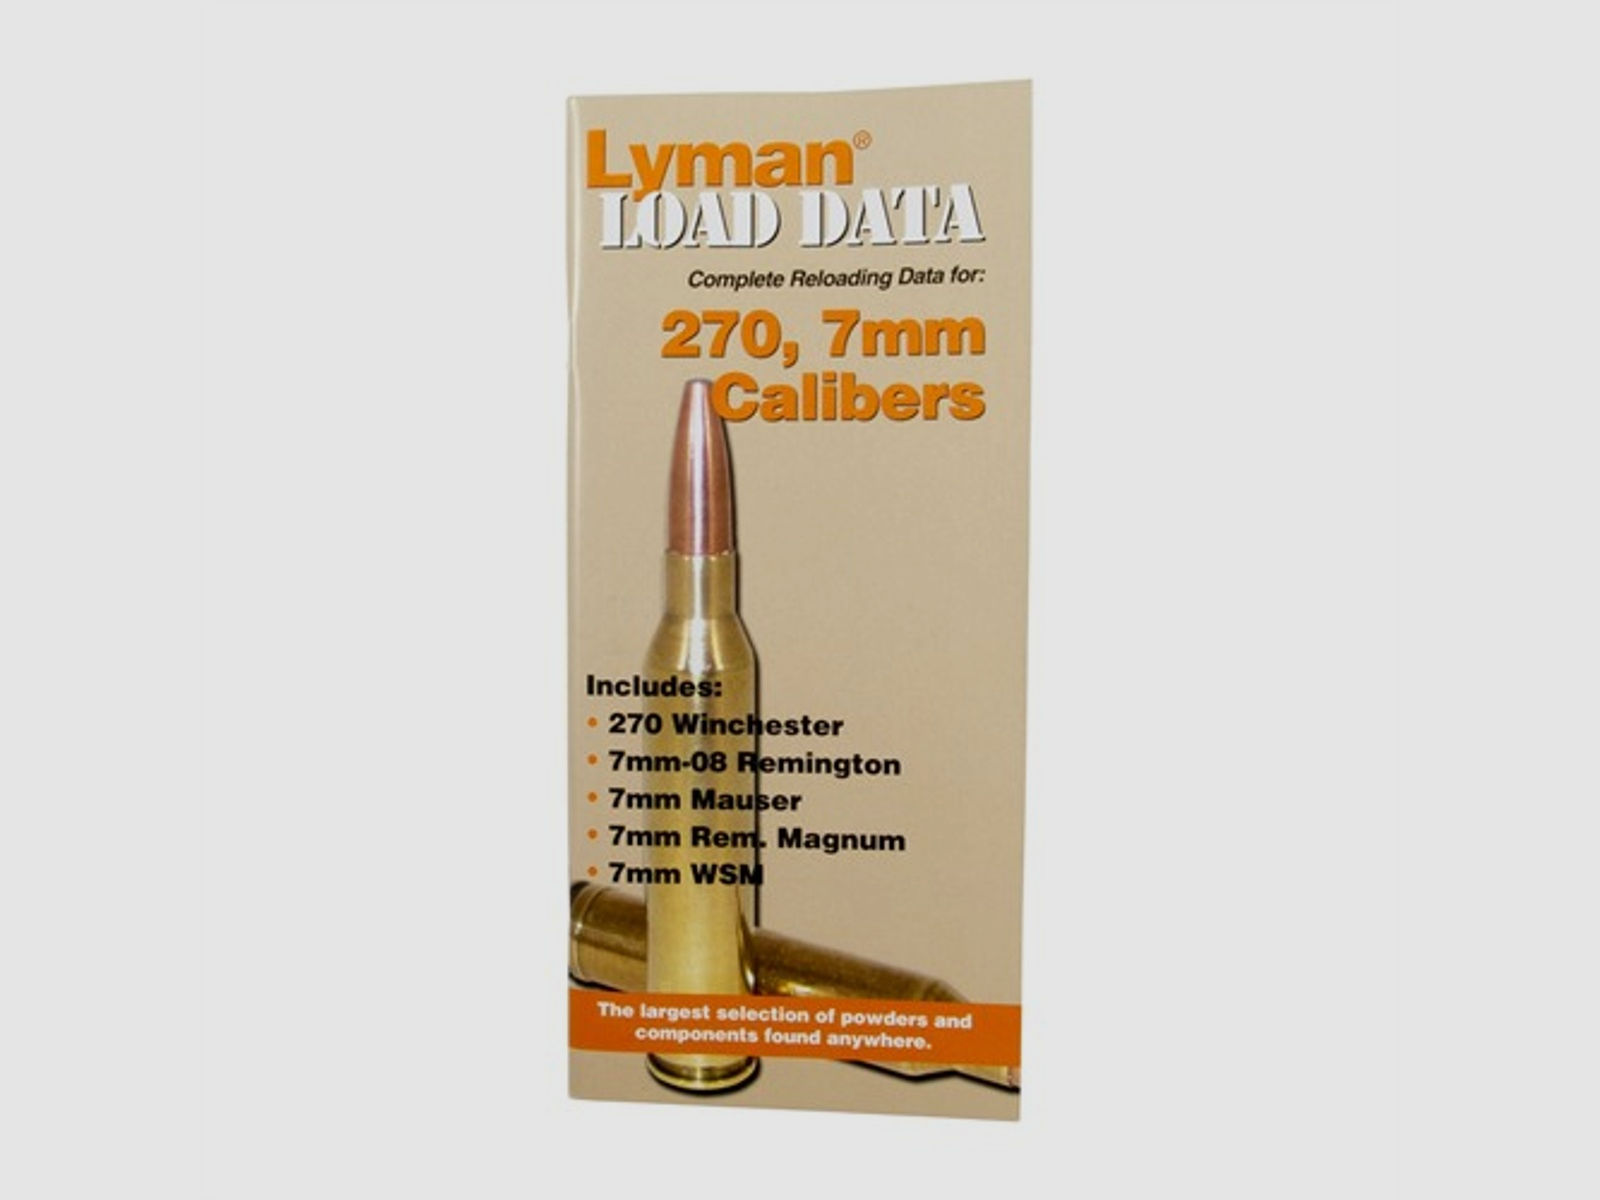 Lyman Wiederladebuch 270, 7mm